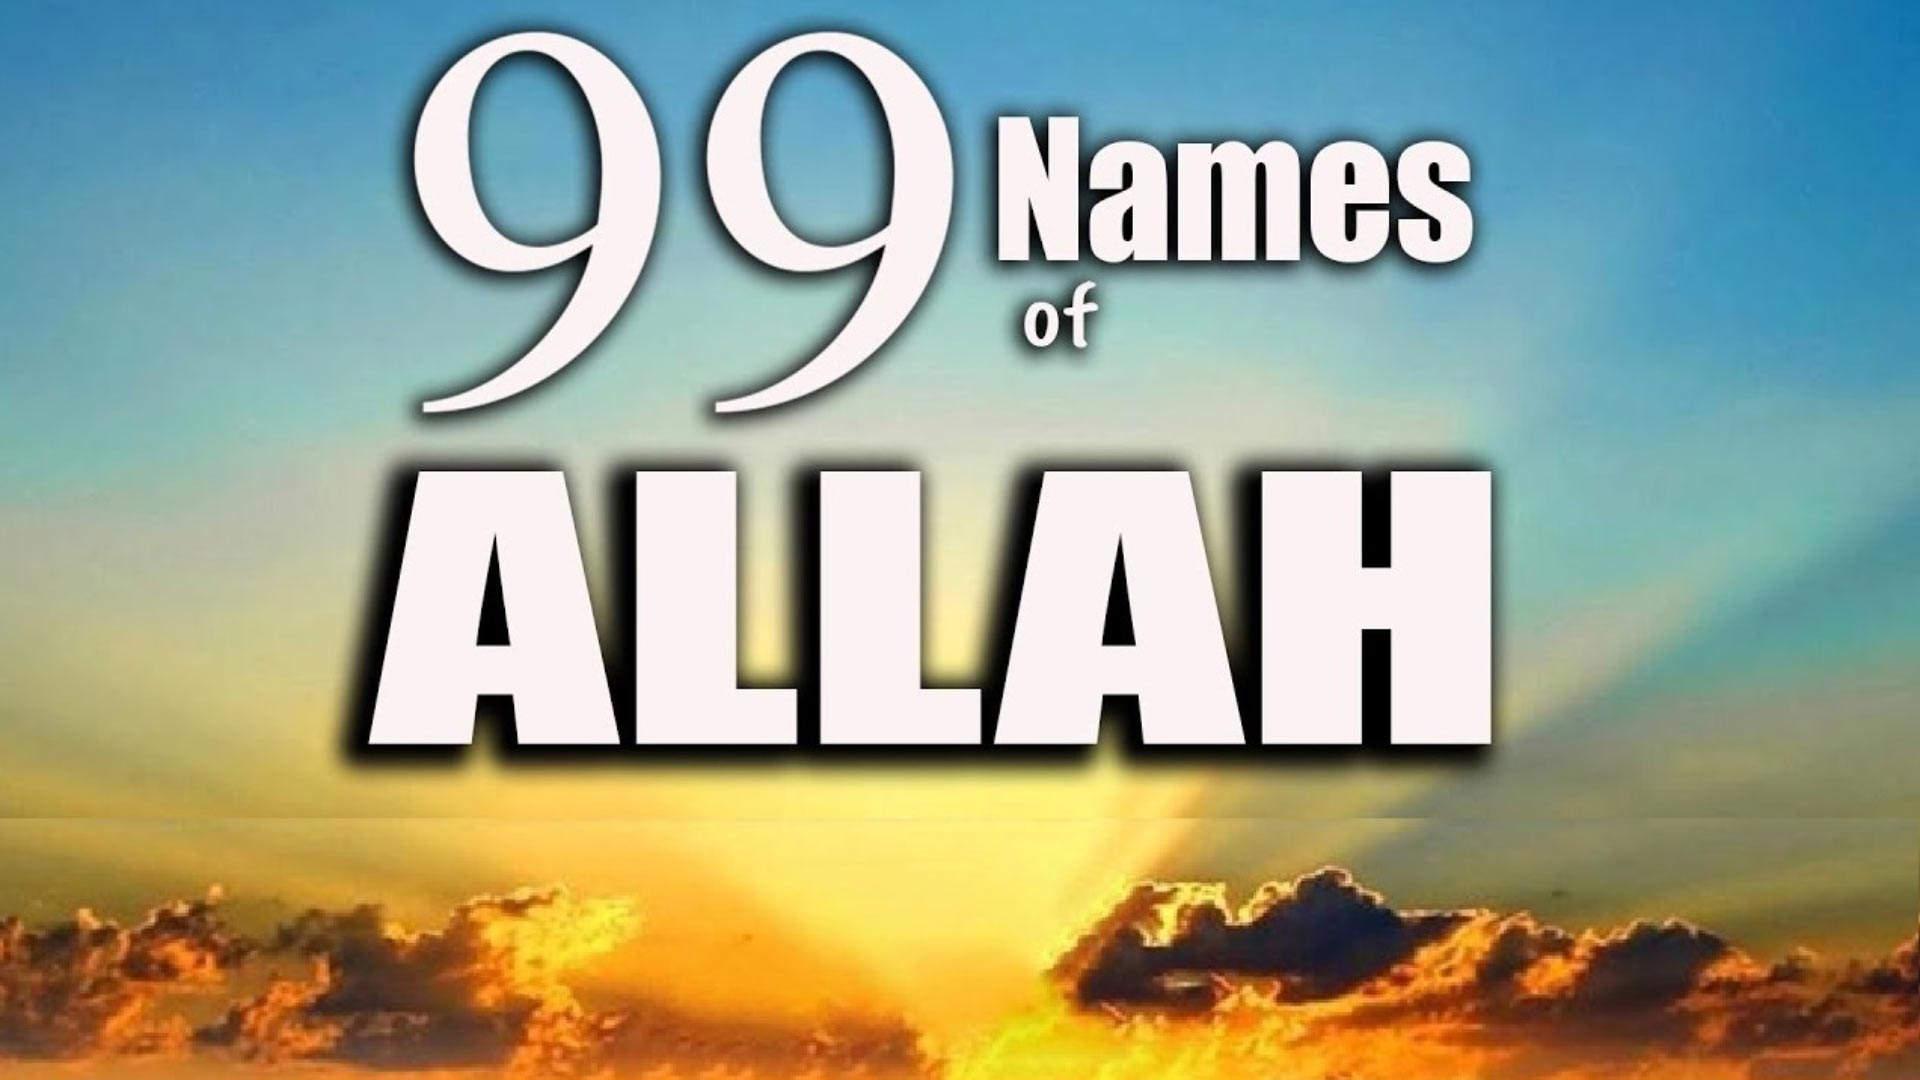 99 имена нашид. 99 Names of Allah.